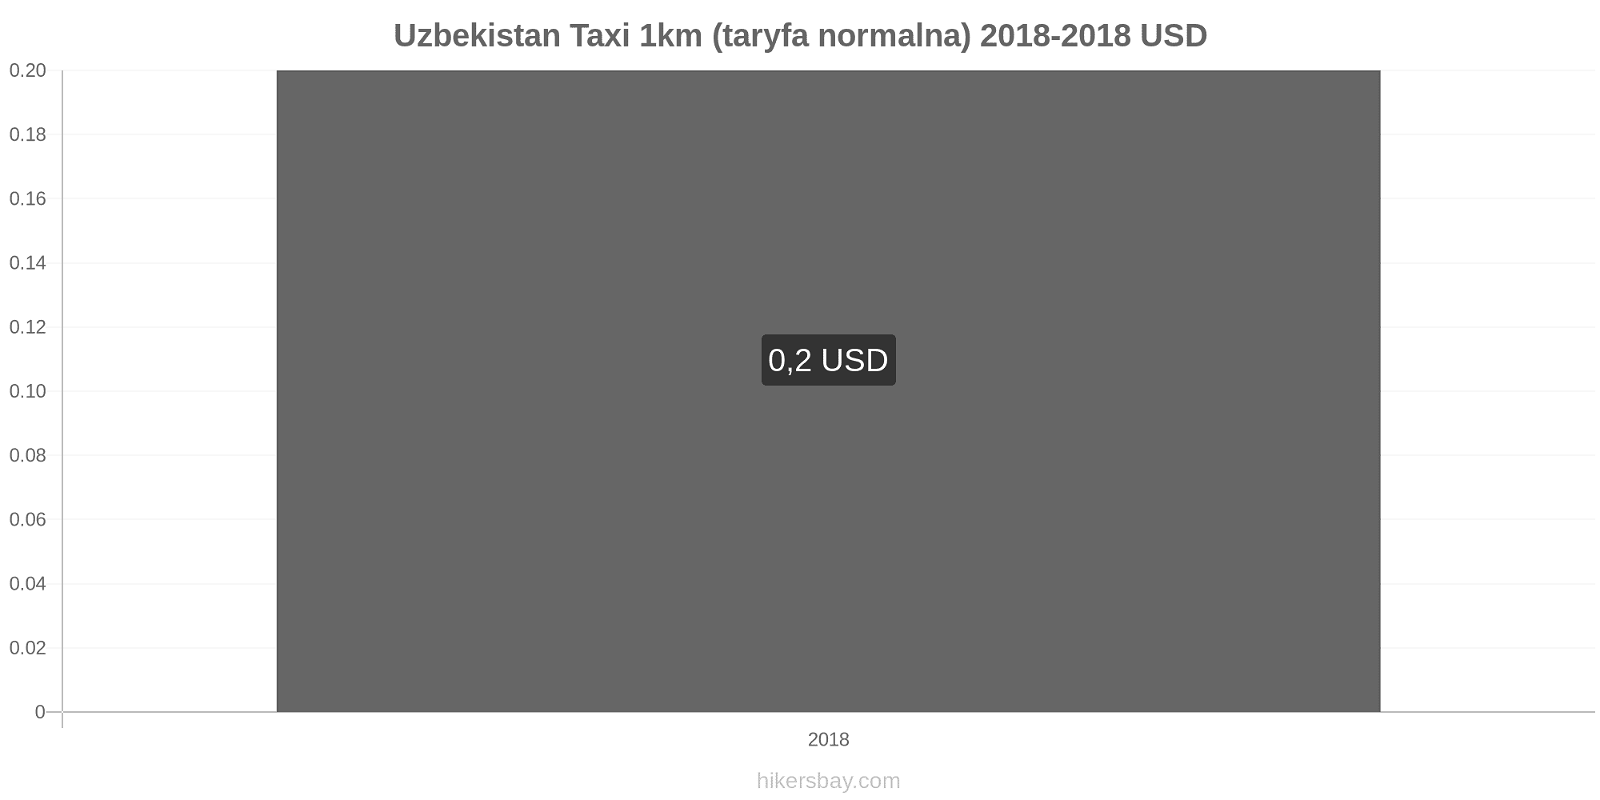 Uzbekistan zmiany cen Taxi 1km (taryfa normalna) hikersbay.com